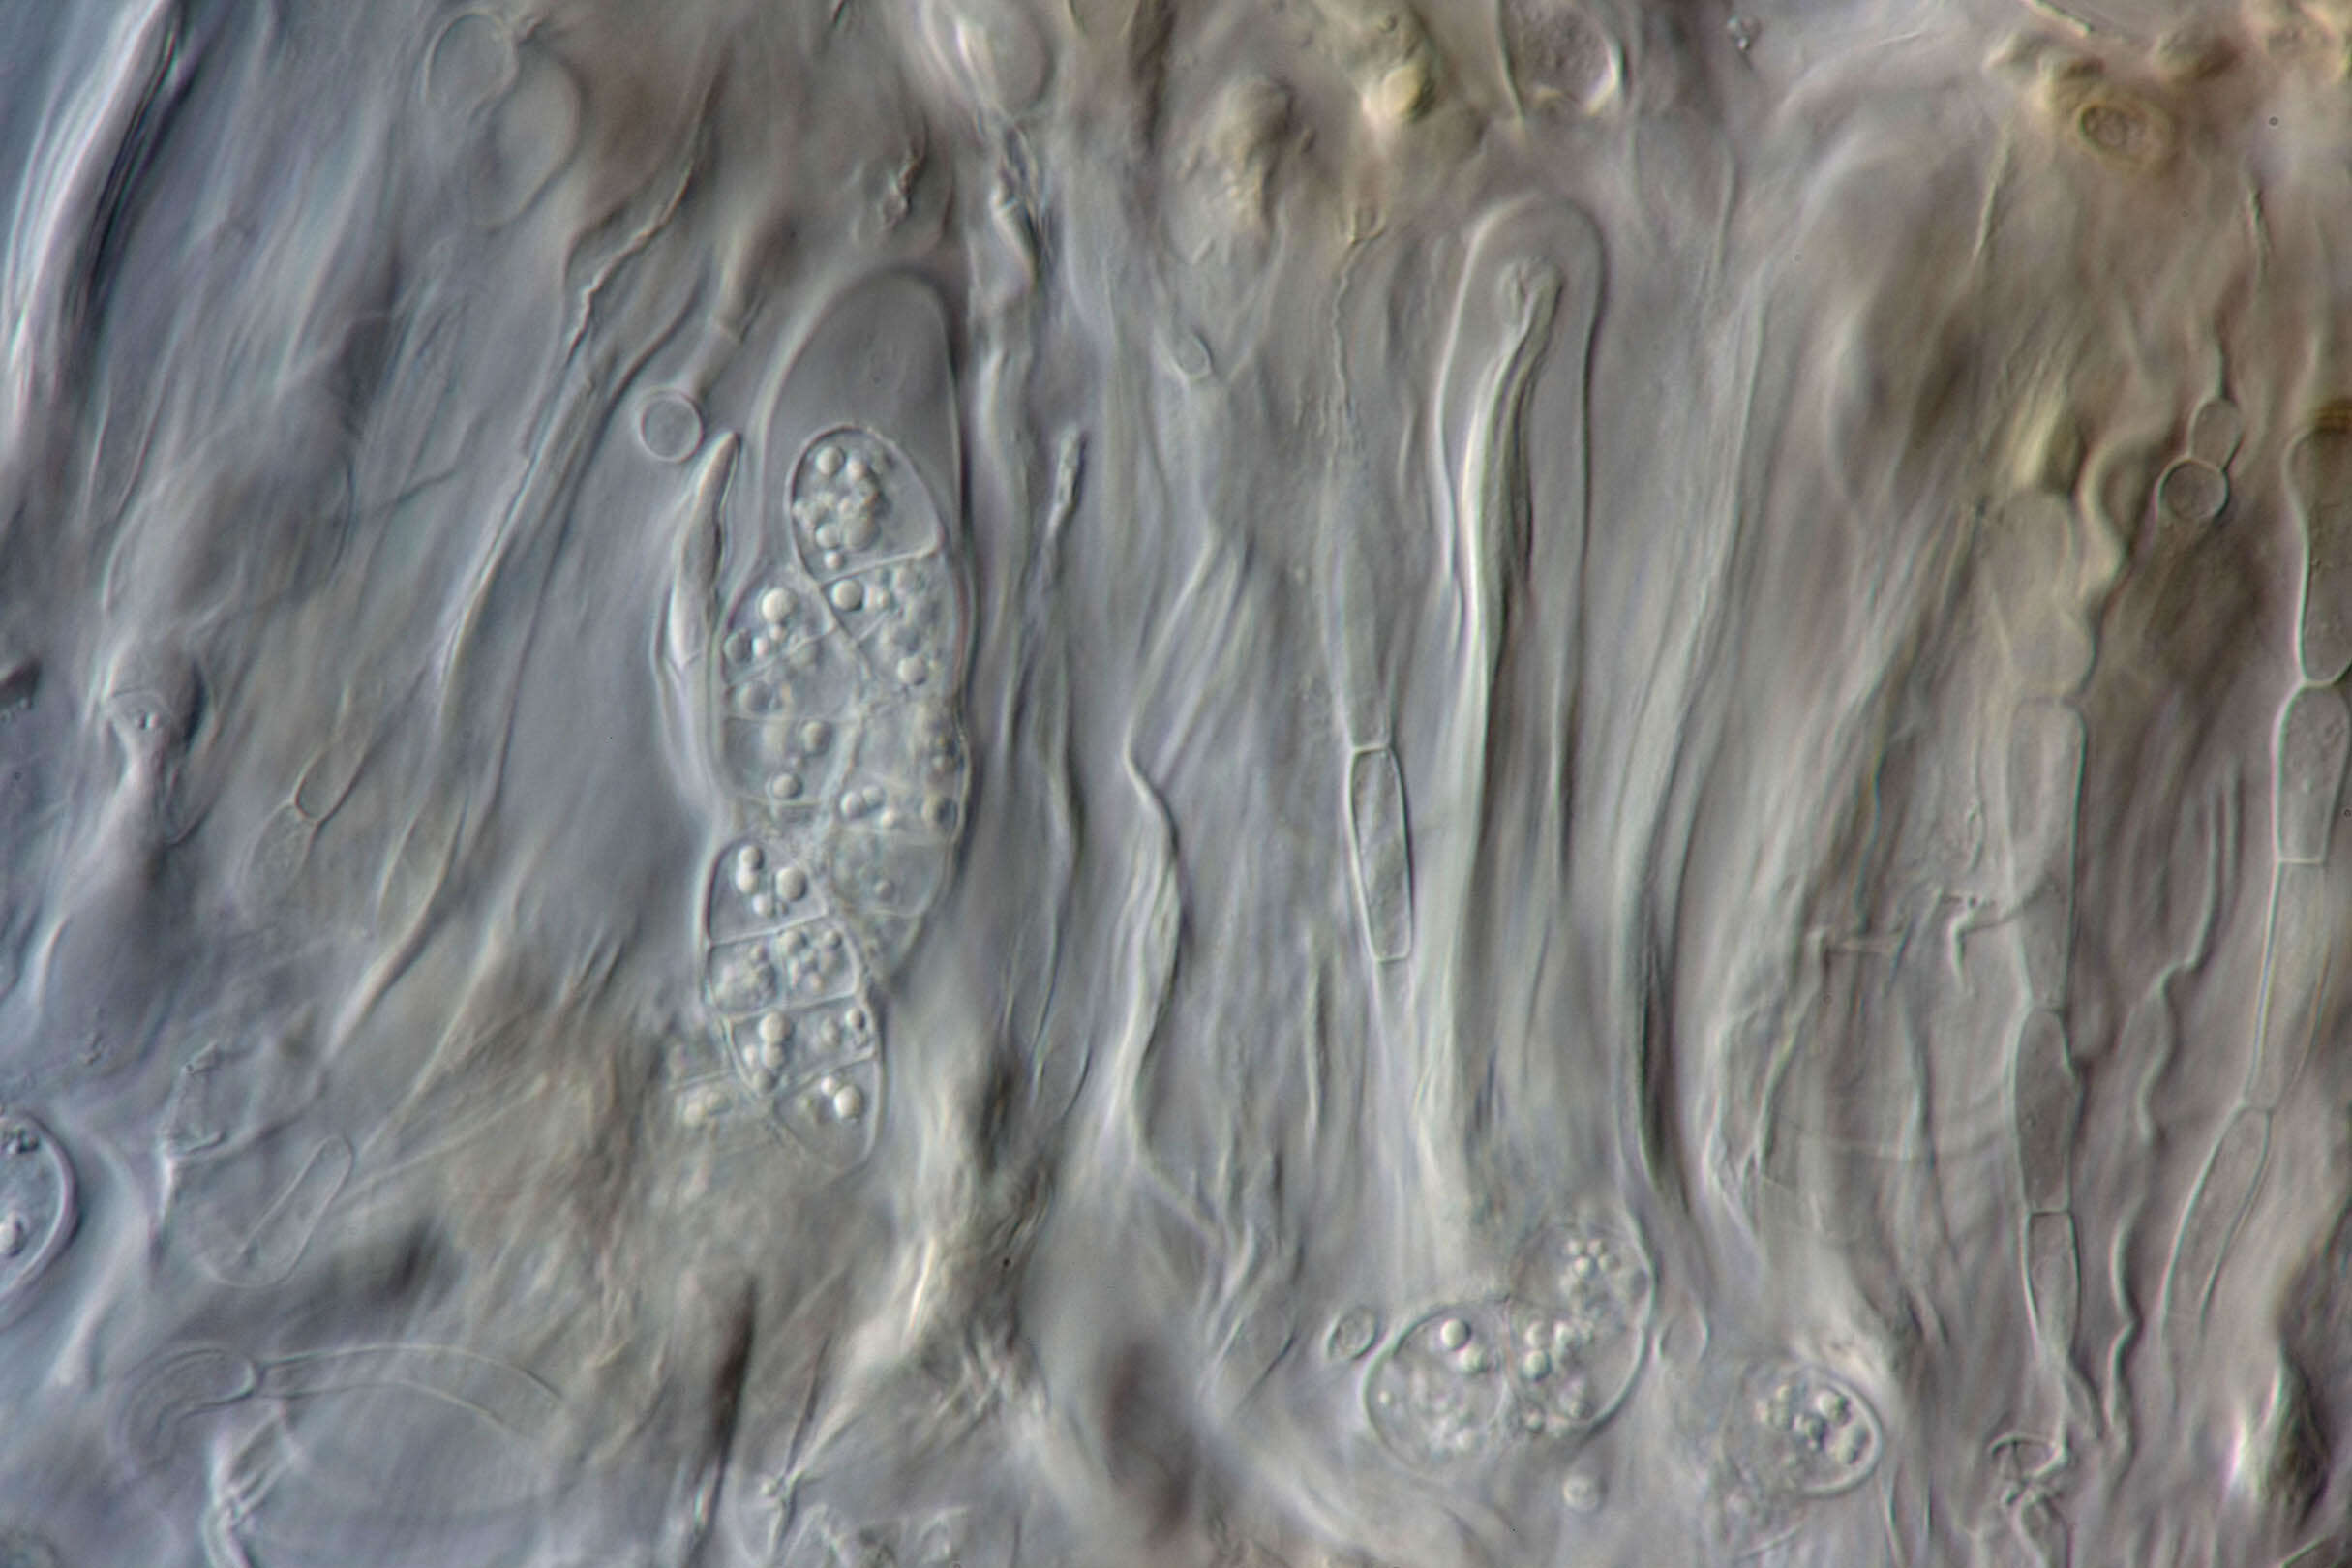 Image of soil jelly lichen